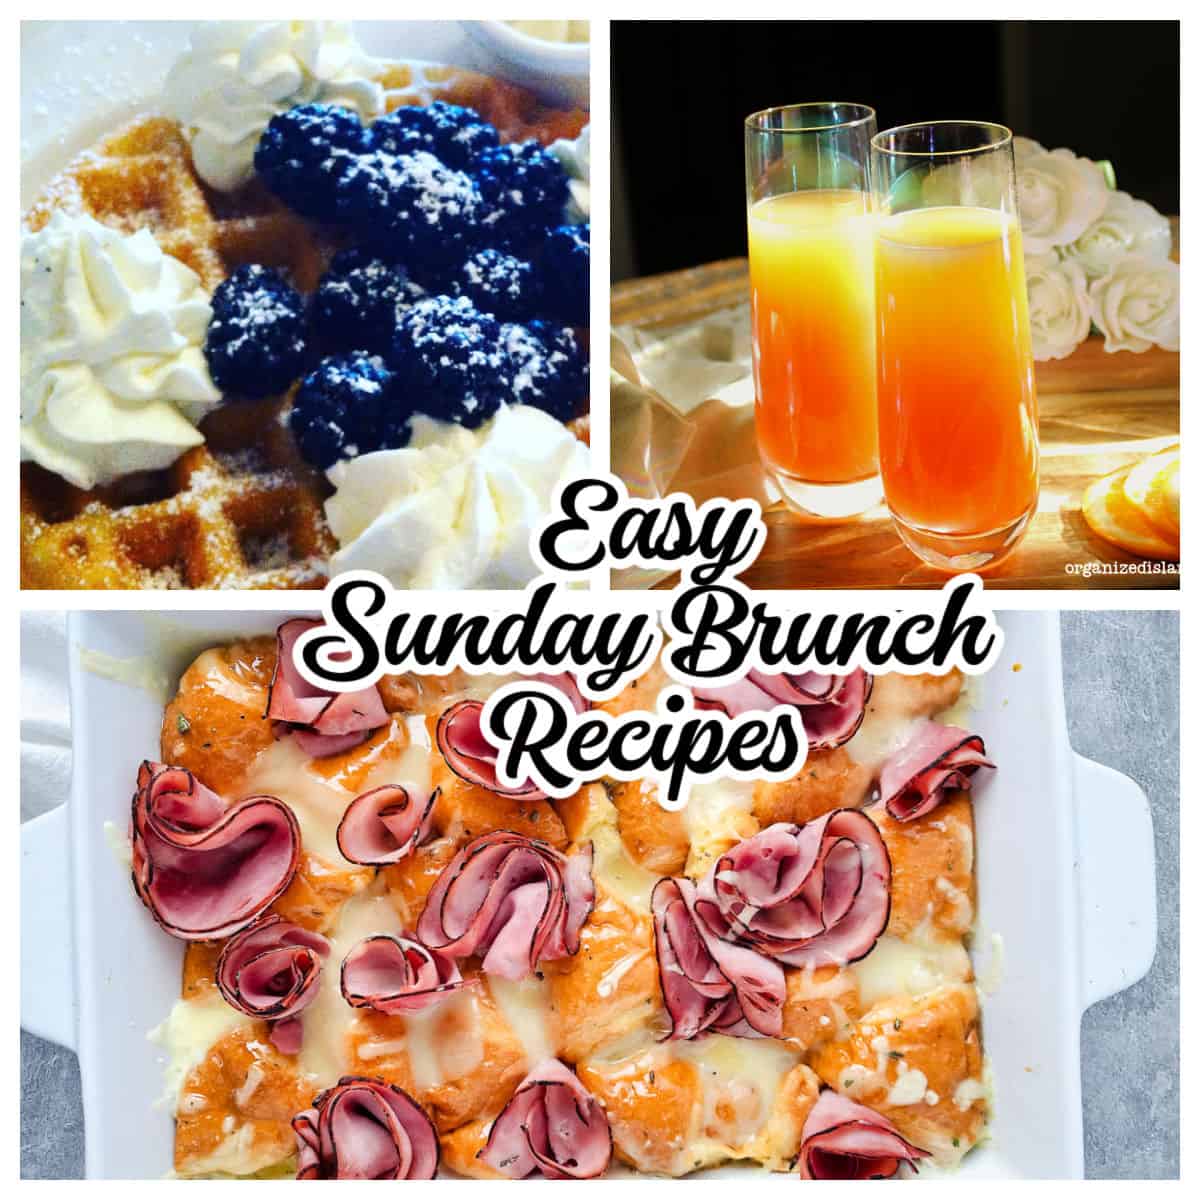 Sunday Brunch Recipes - Organized Island